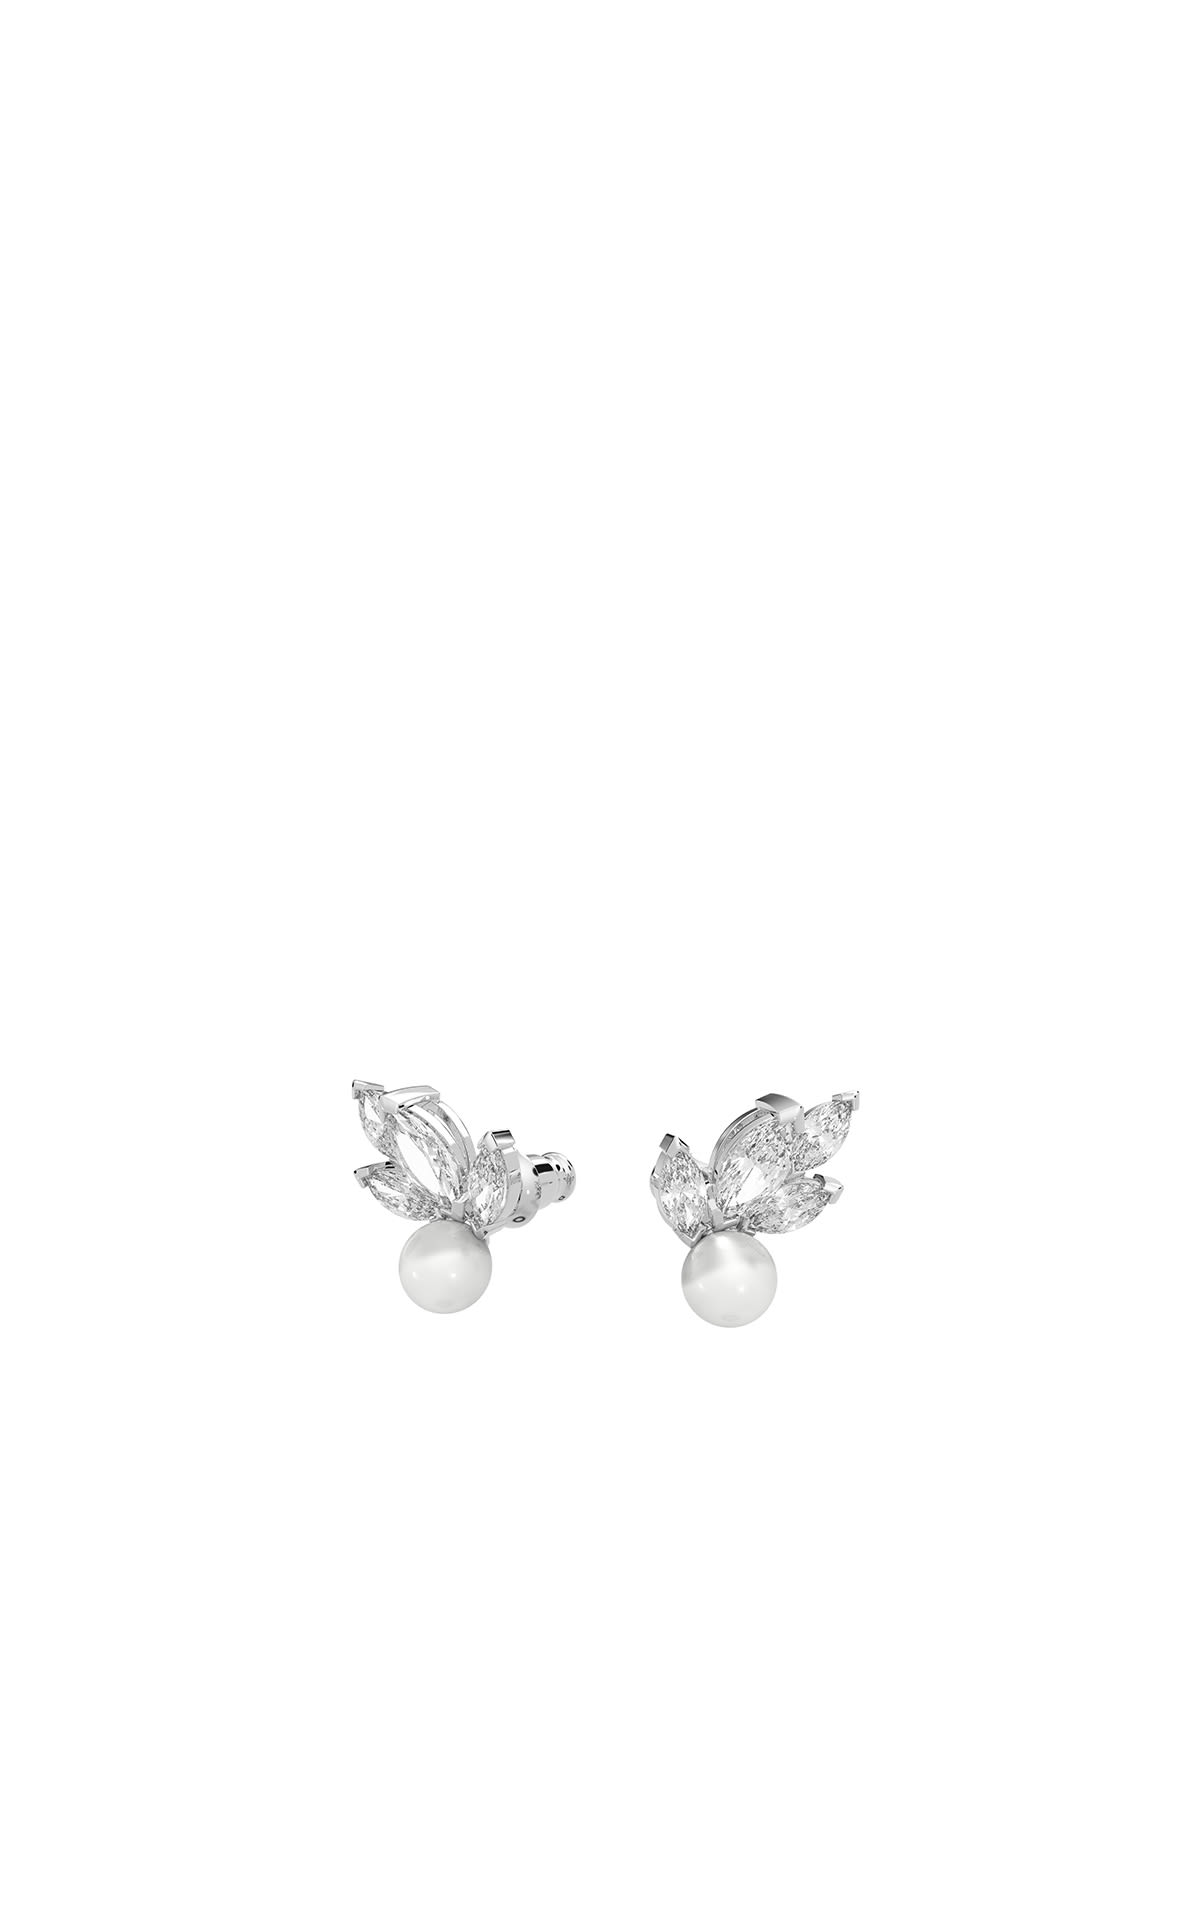 Swarovski Louison Pearl stud earrings, white rhodium-plated